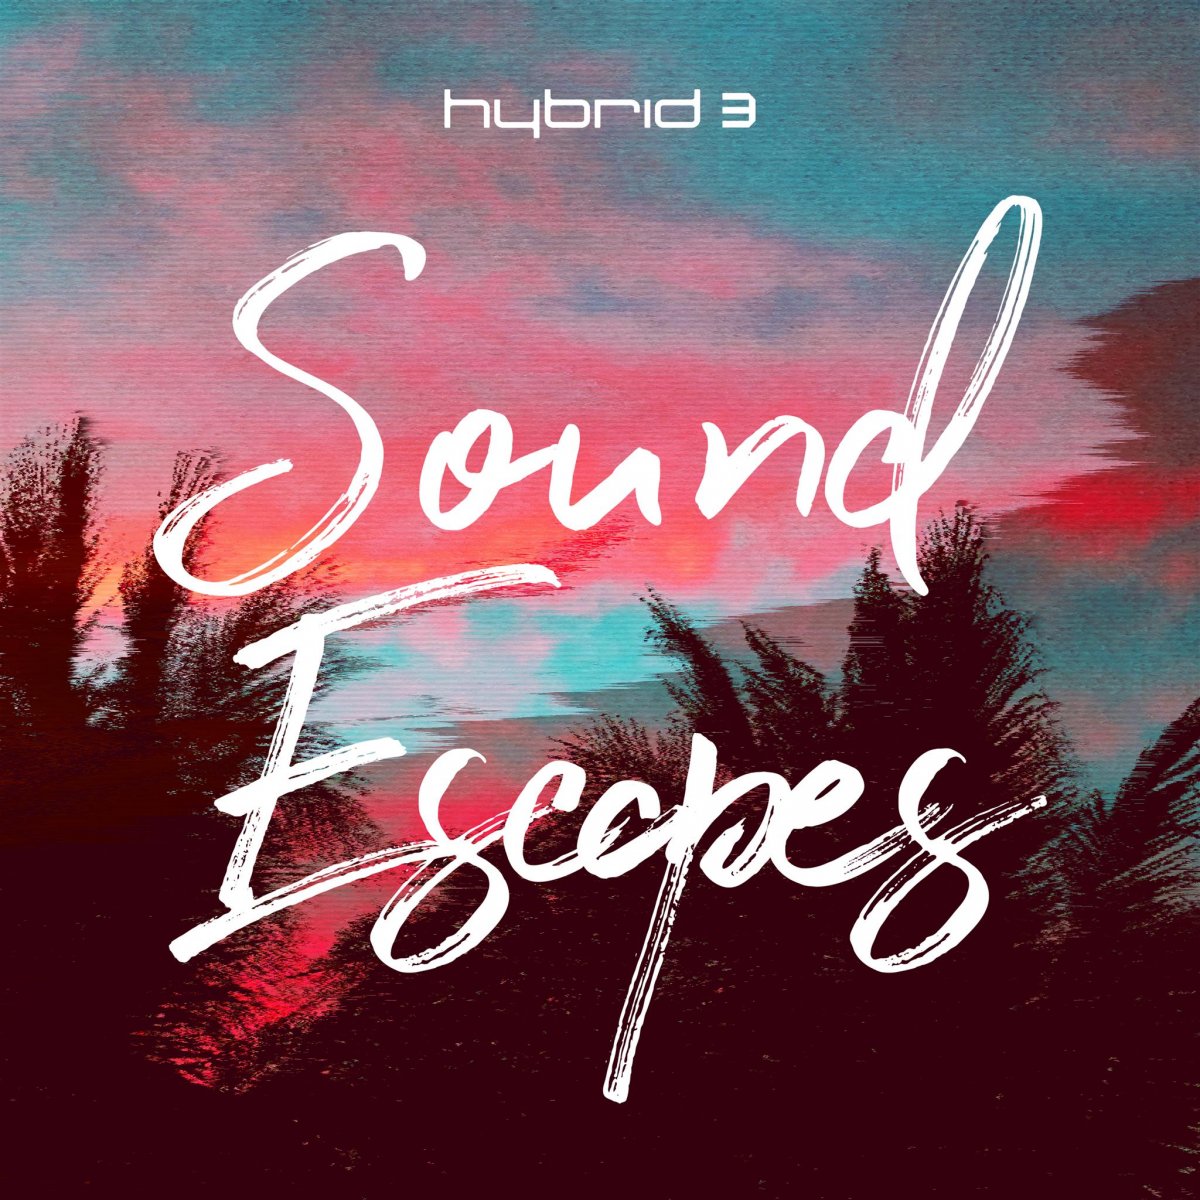 AIR Music Tech Sound Escapes for Hybrid 3